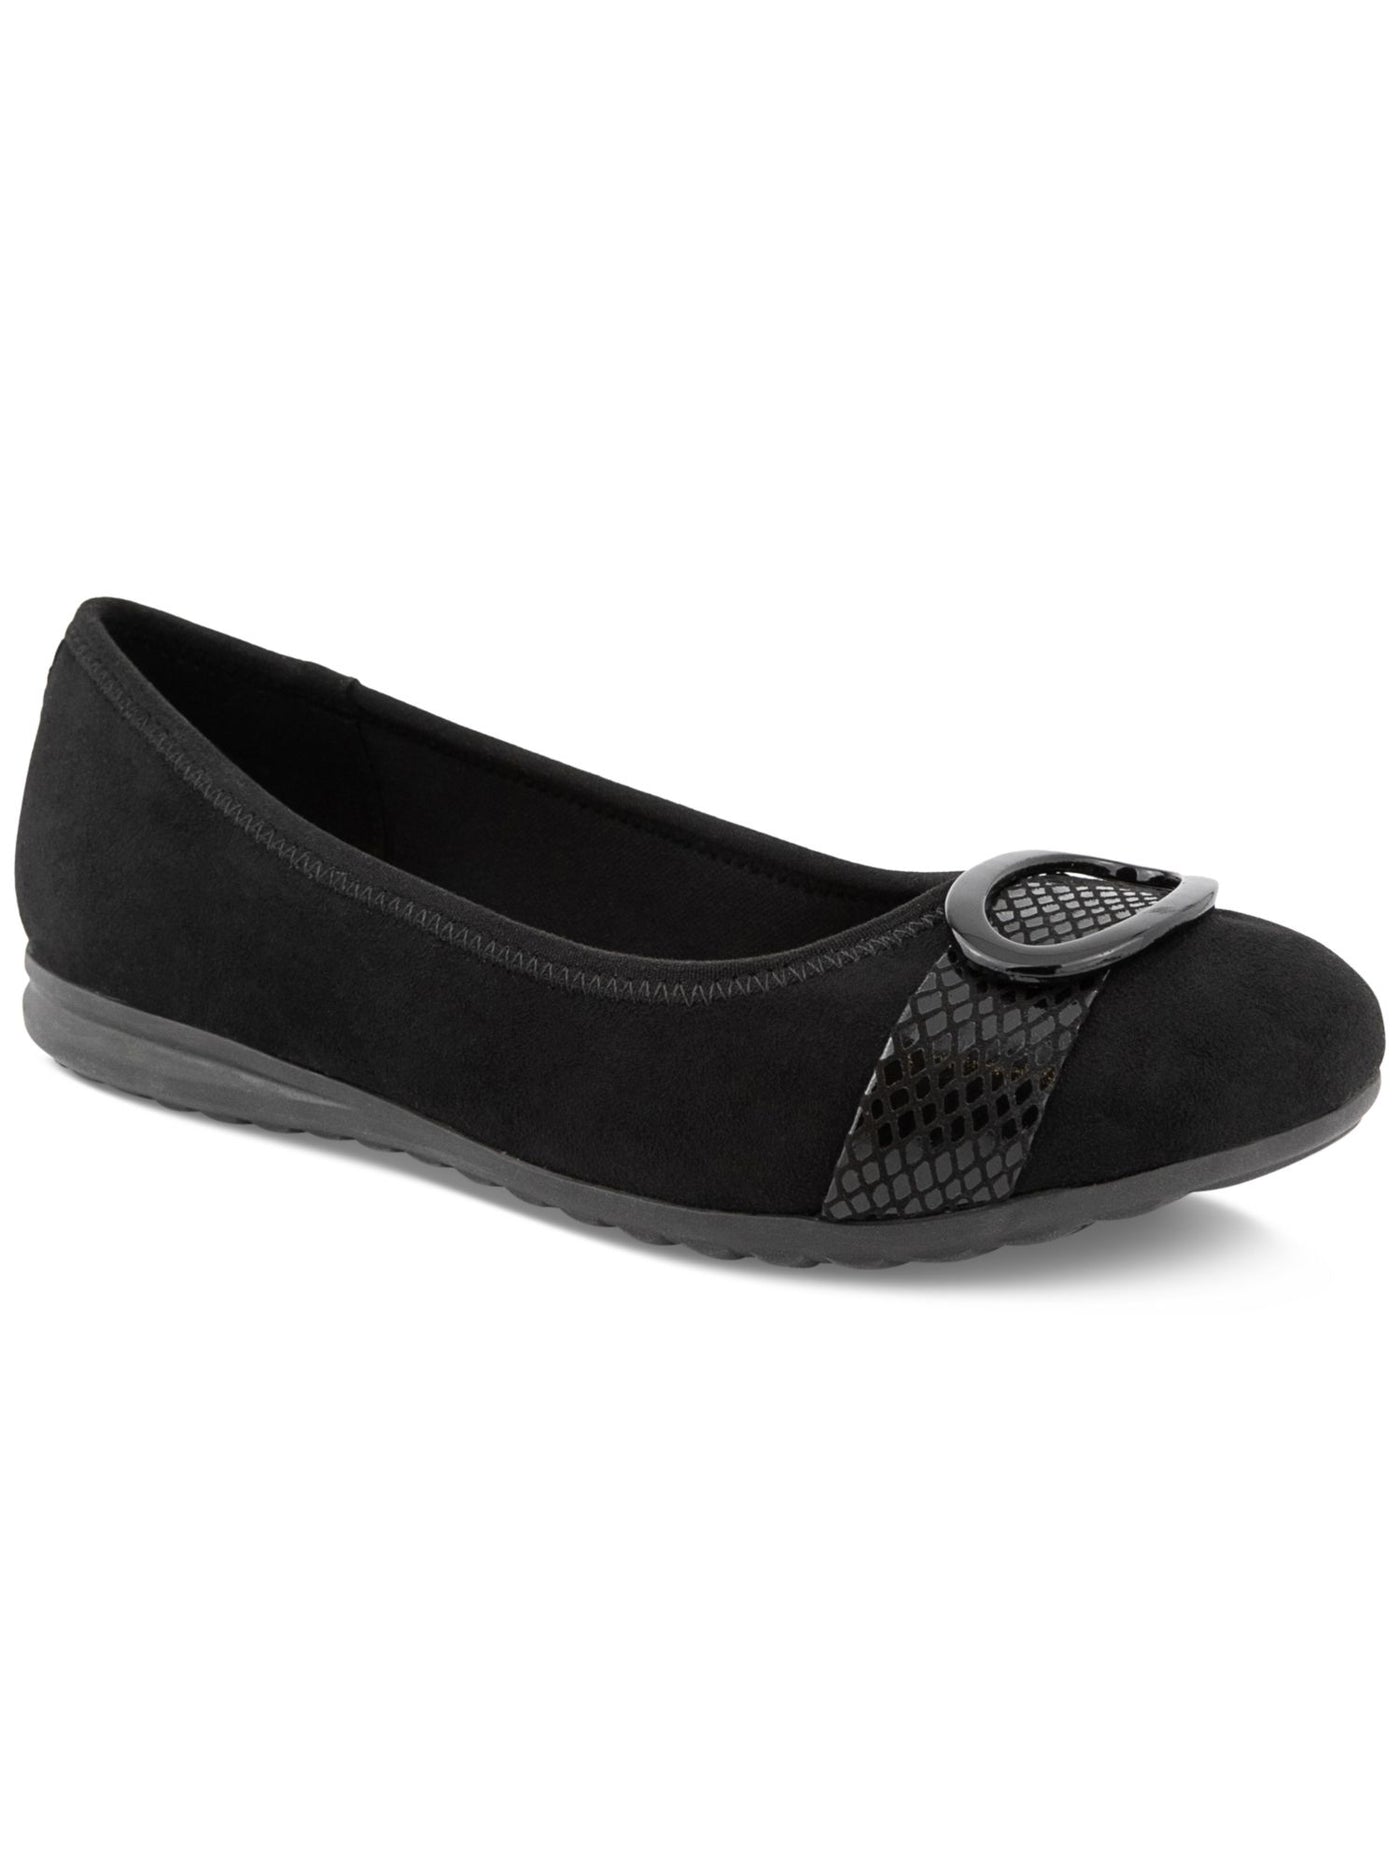 KAREN SCOTT Womens Black Cushioned Tashelle Round Toe Slip On Dress Flats Shoes 7 M